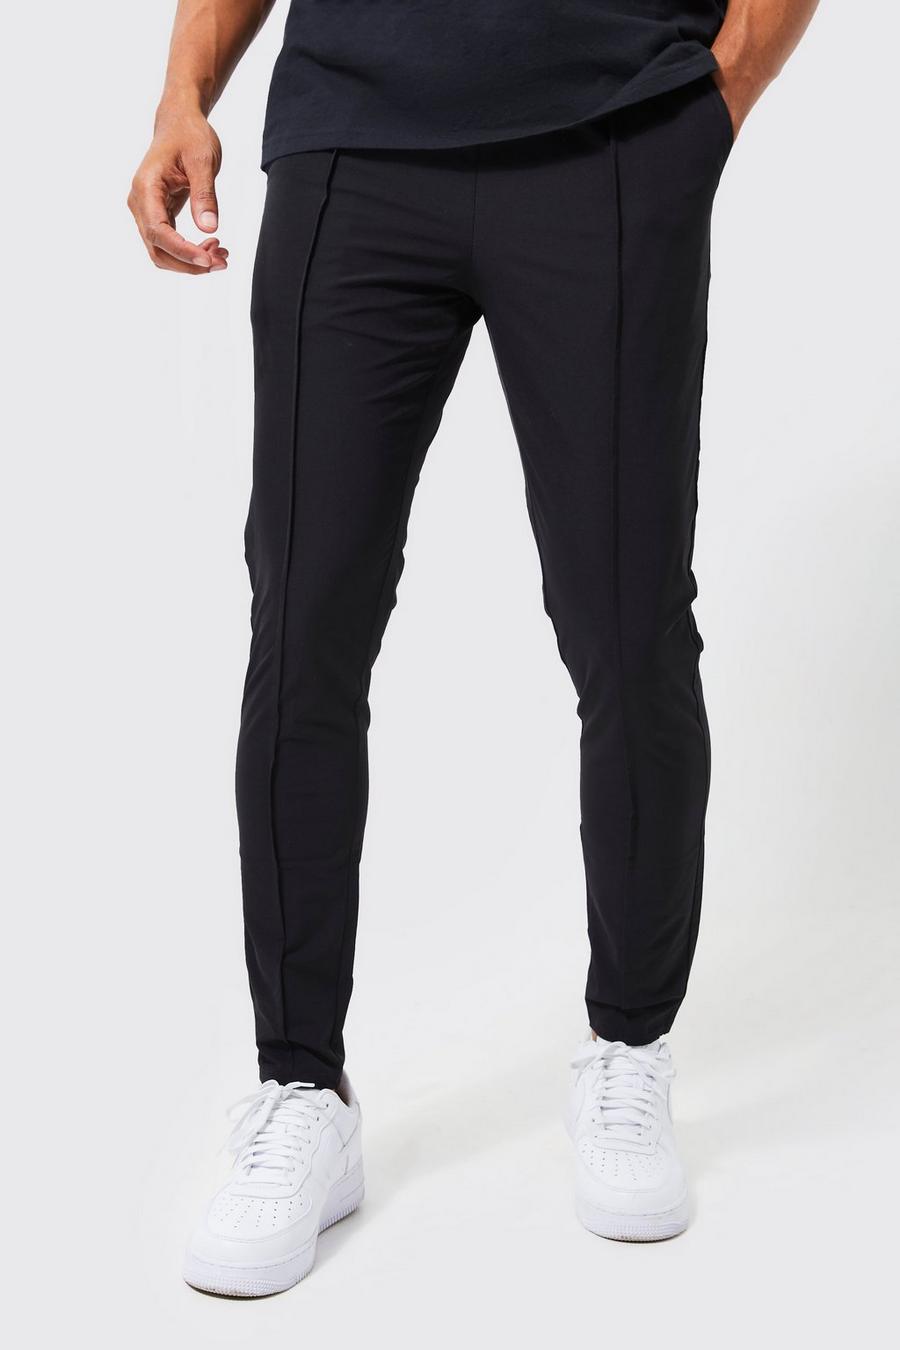 Black Elasticated Waist Skinny Stretch Golf Pants